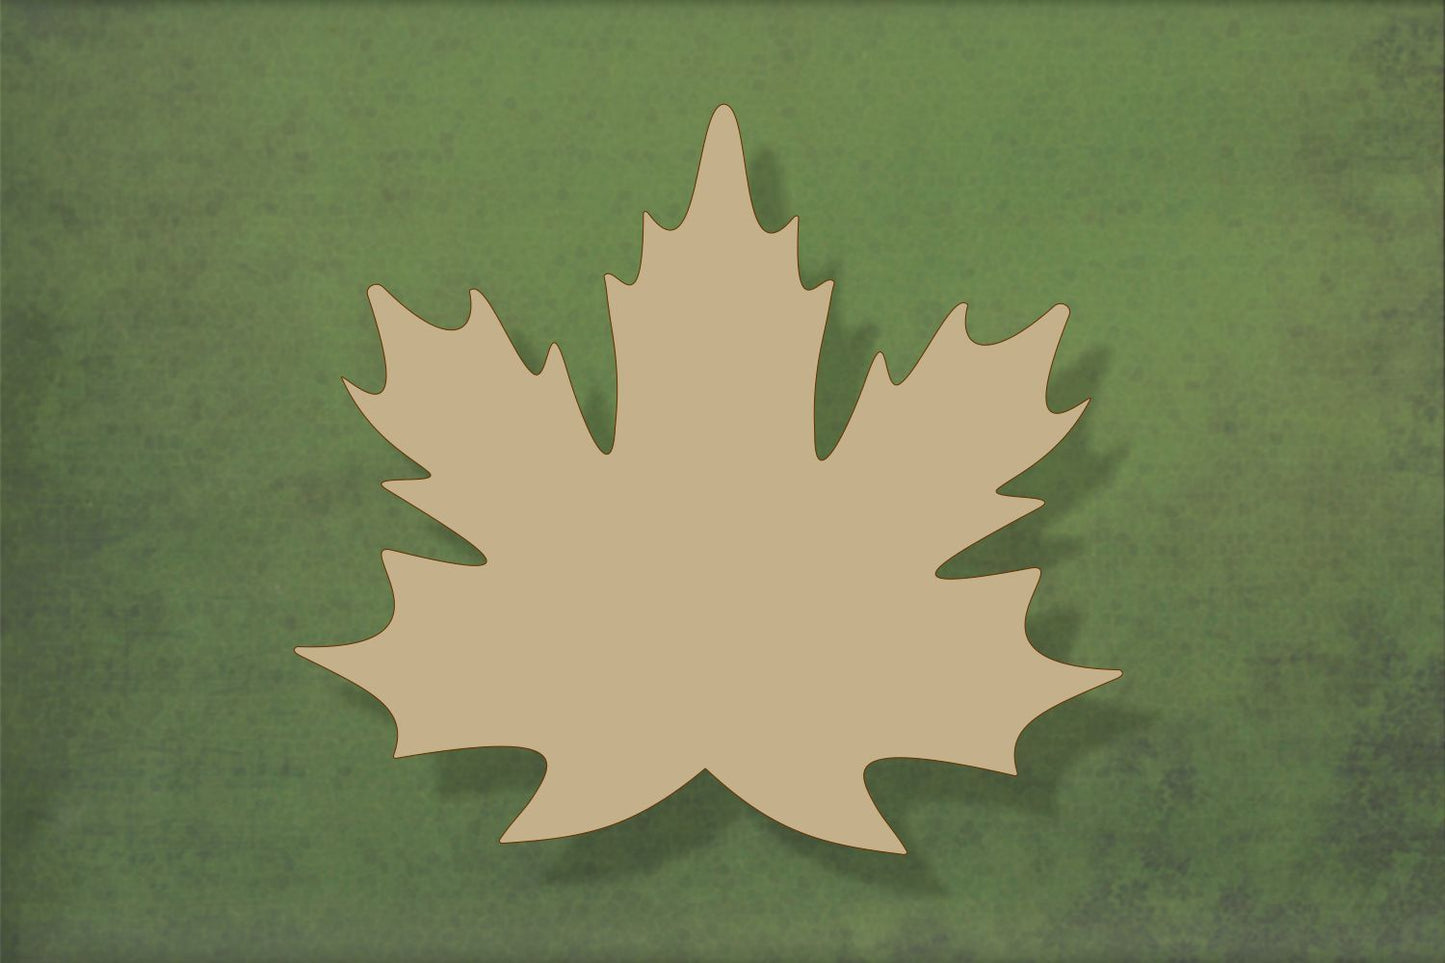 Laser cut, blank wooden Maple leaf shape for craft